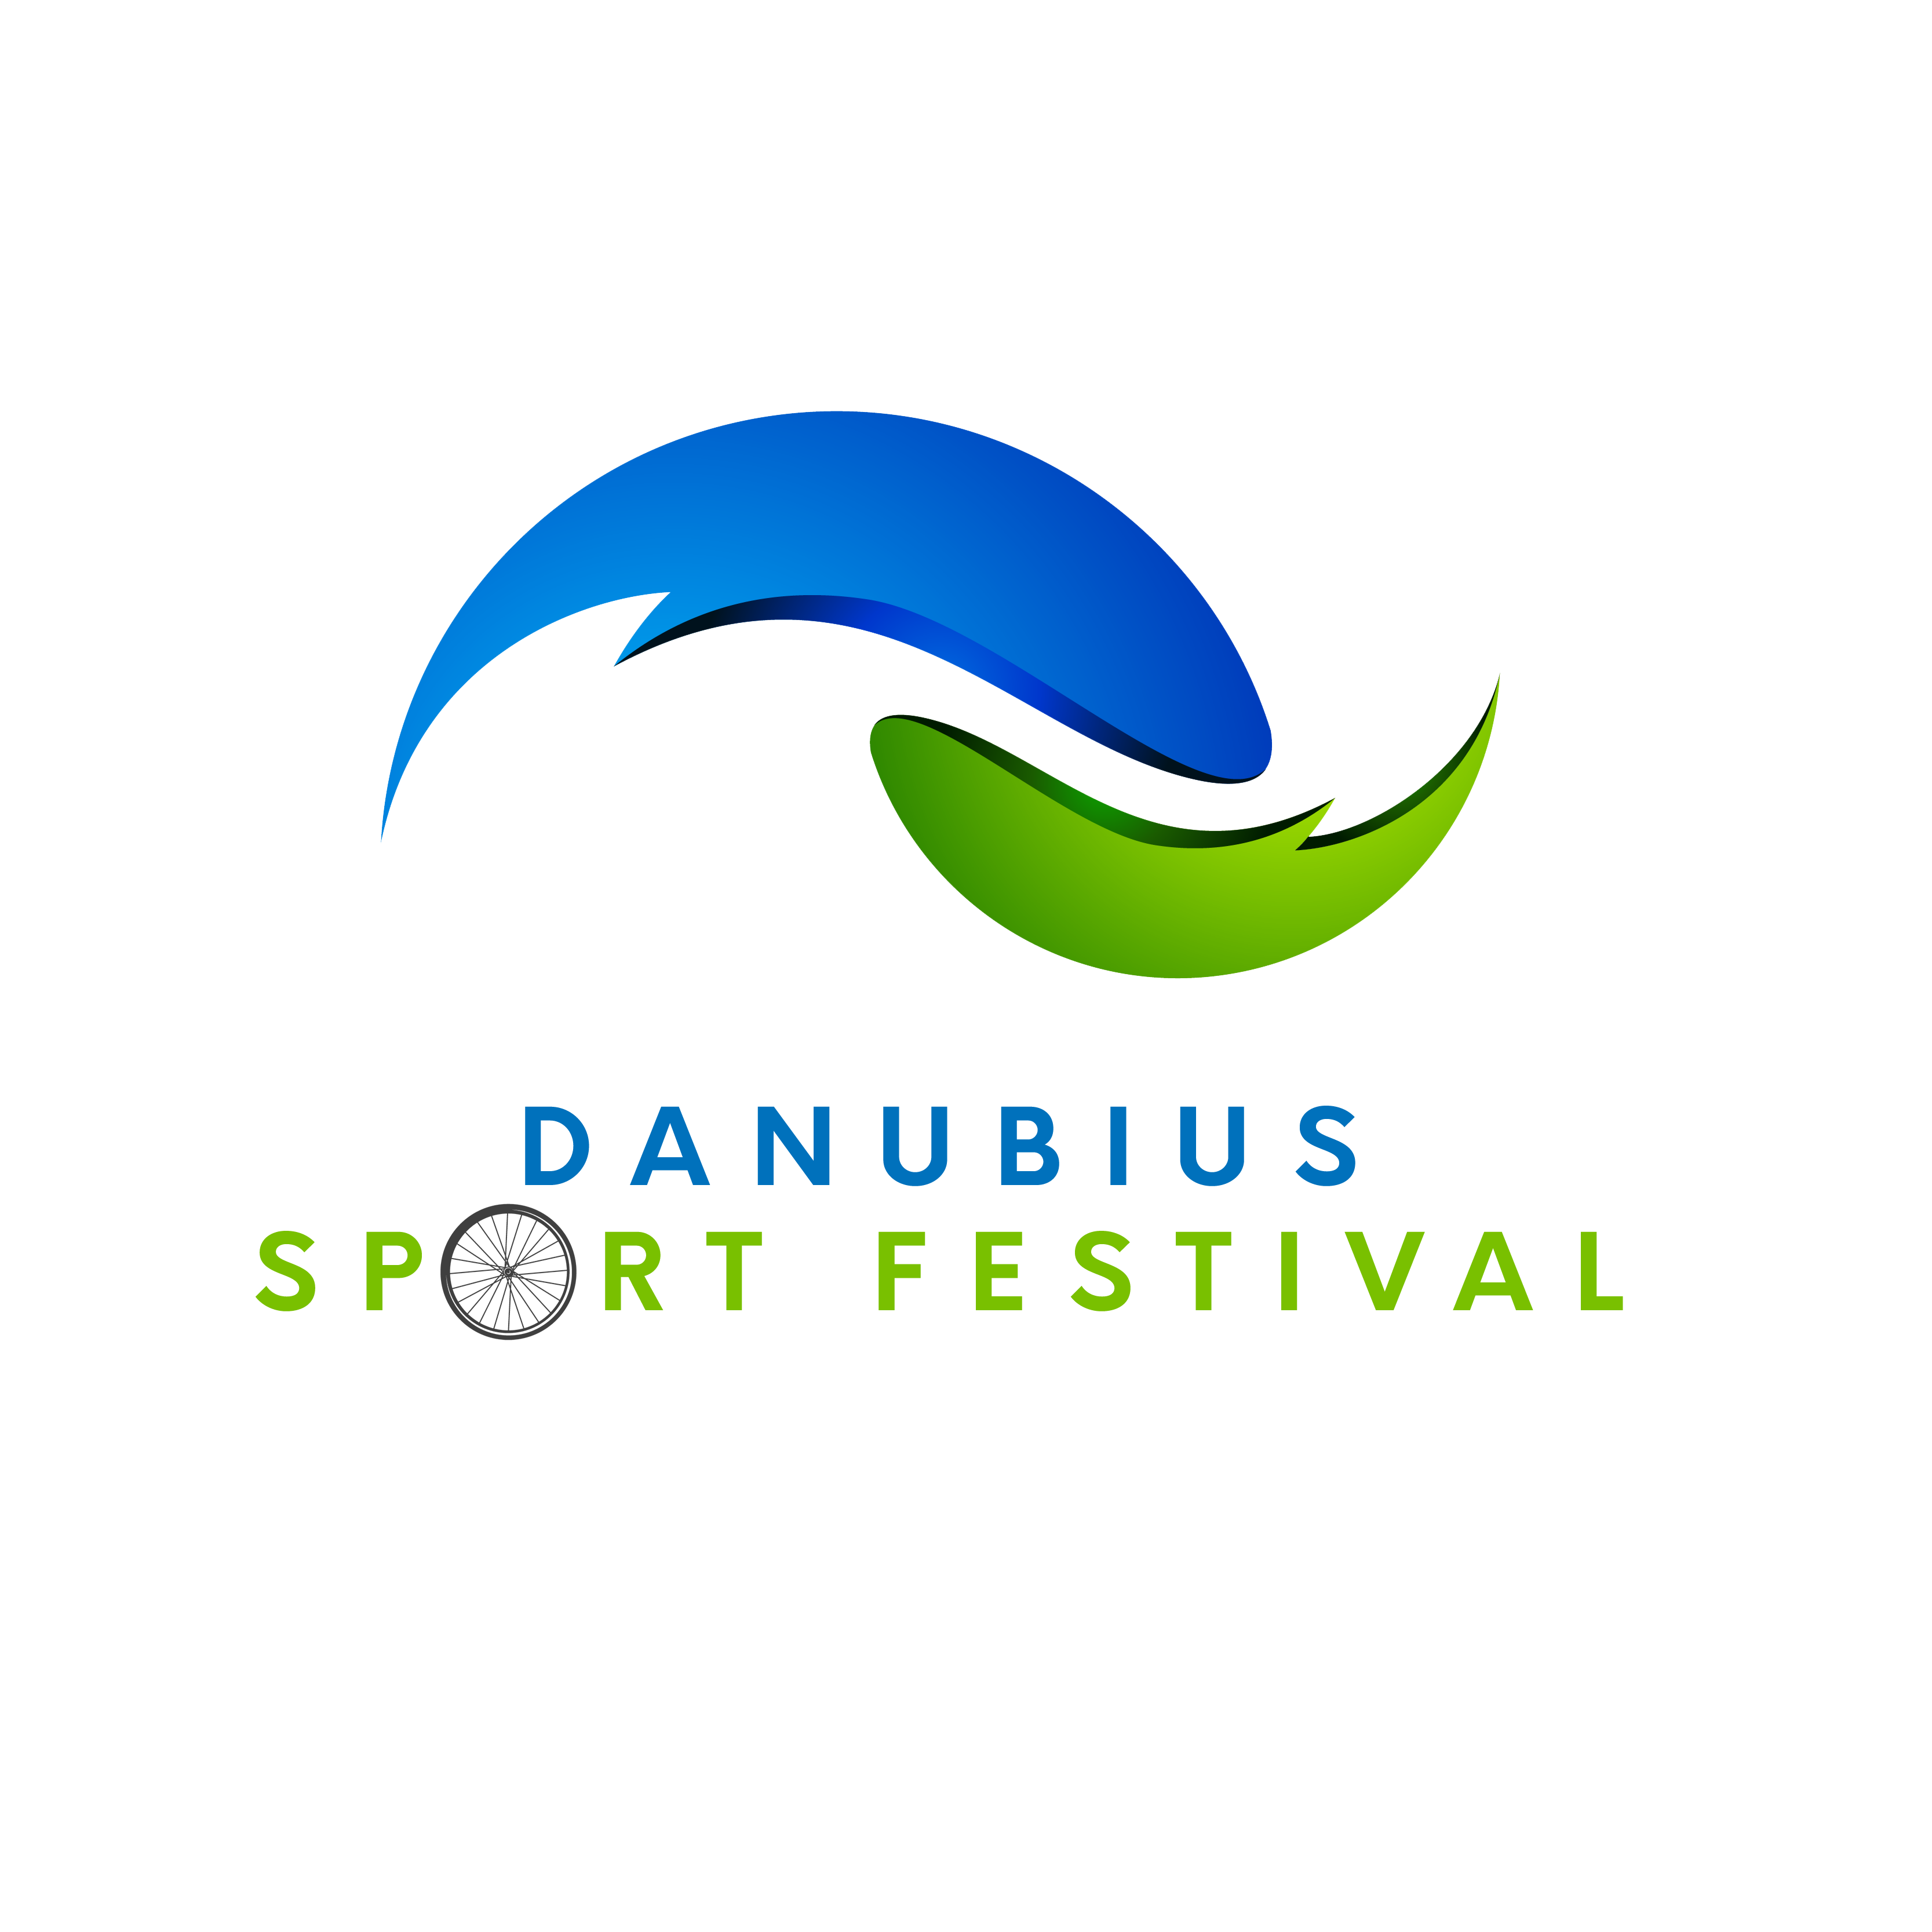 DANUBIUS SPORT FESTIVAL  logo